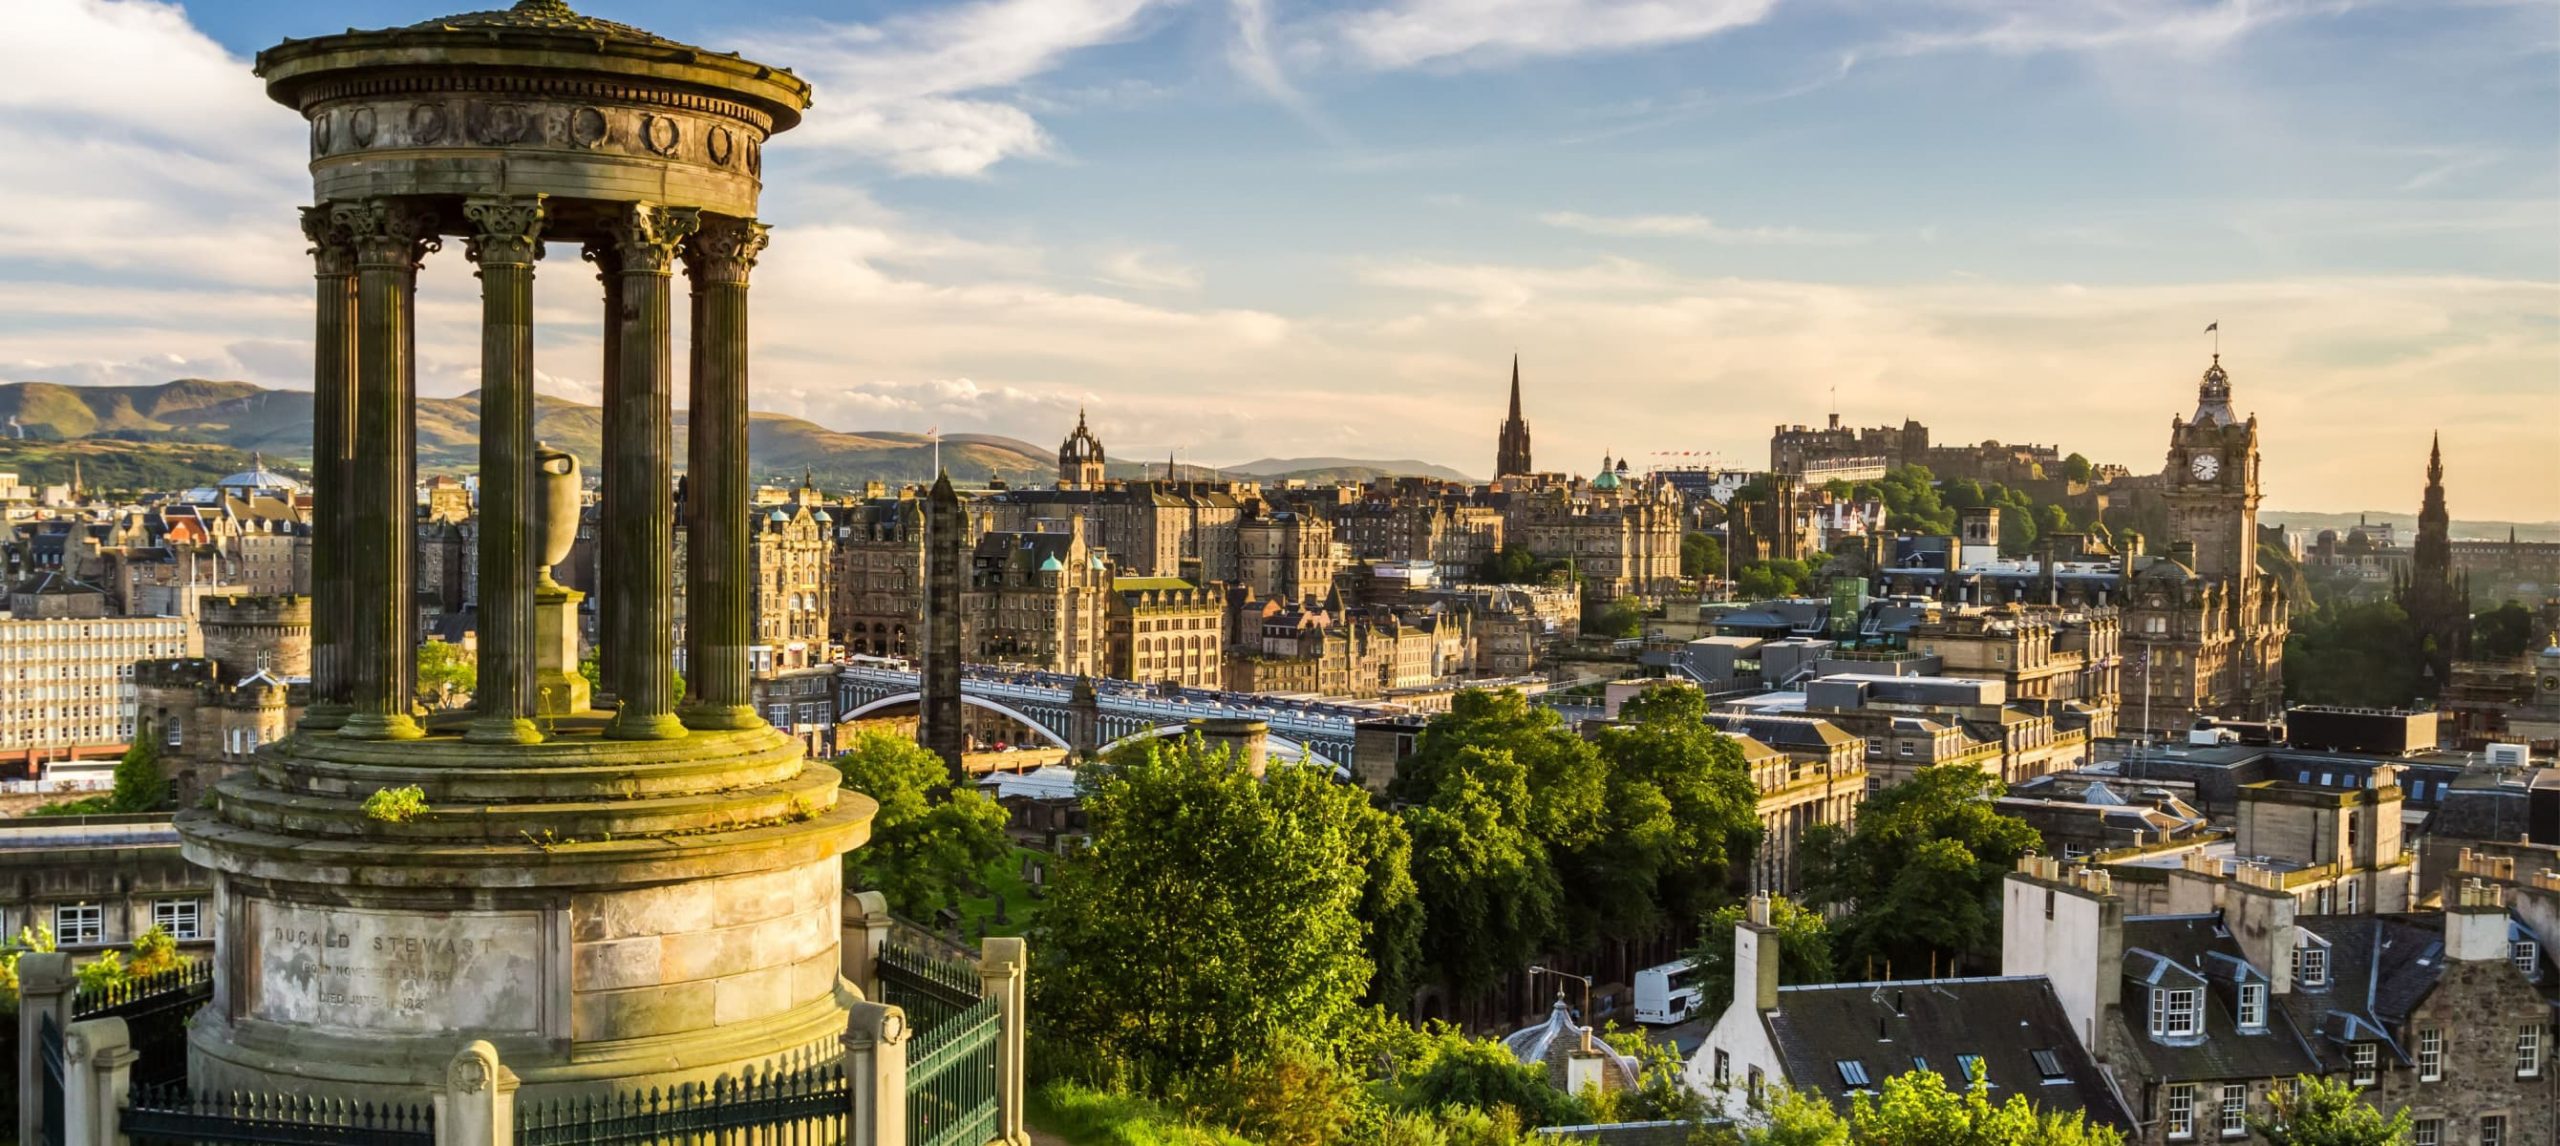 How To Travel From London to Edinburgh, Scotland: 4 Easy Ways